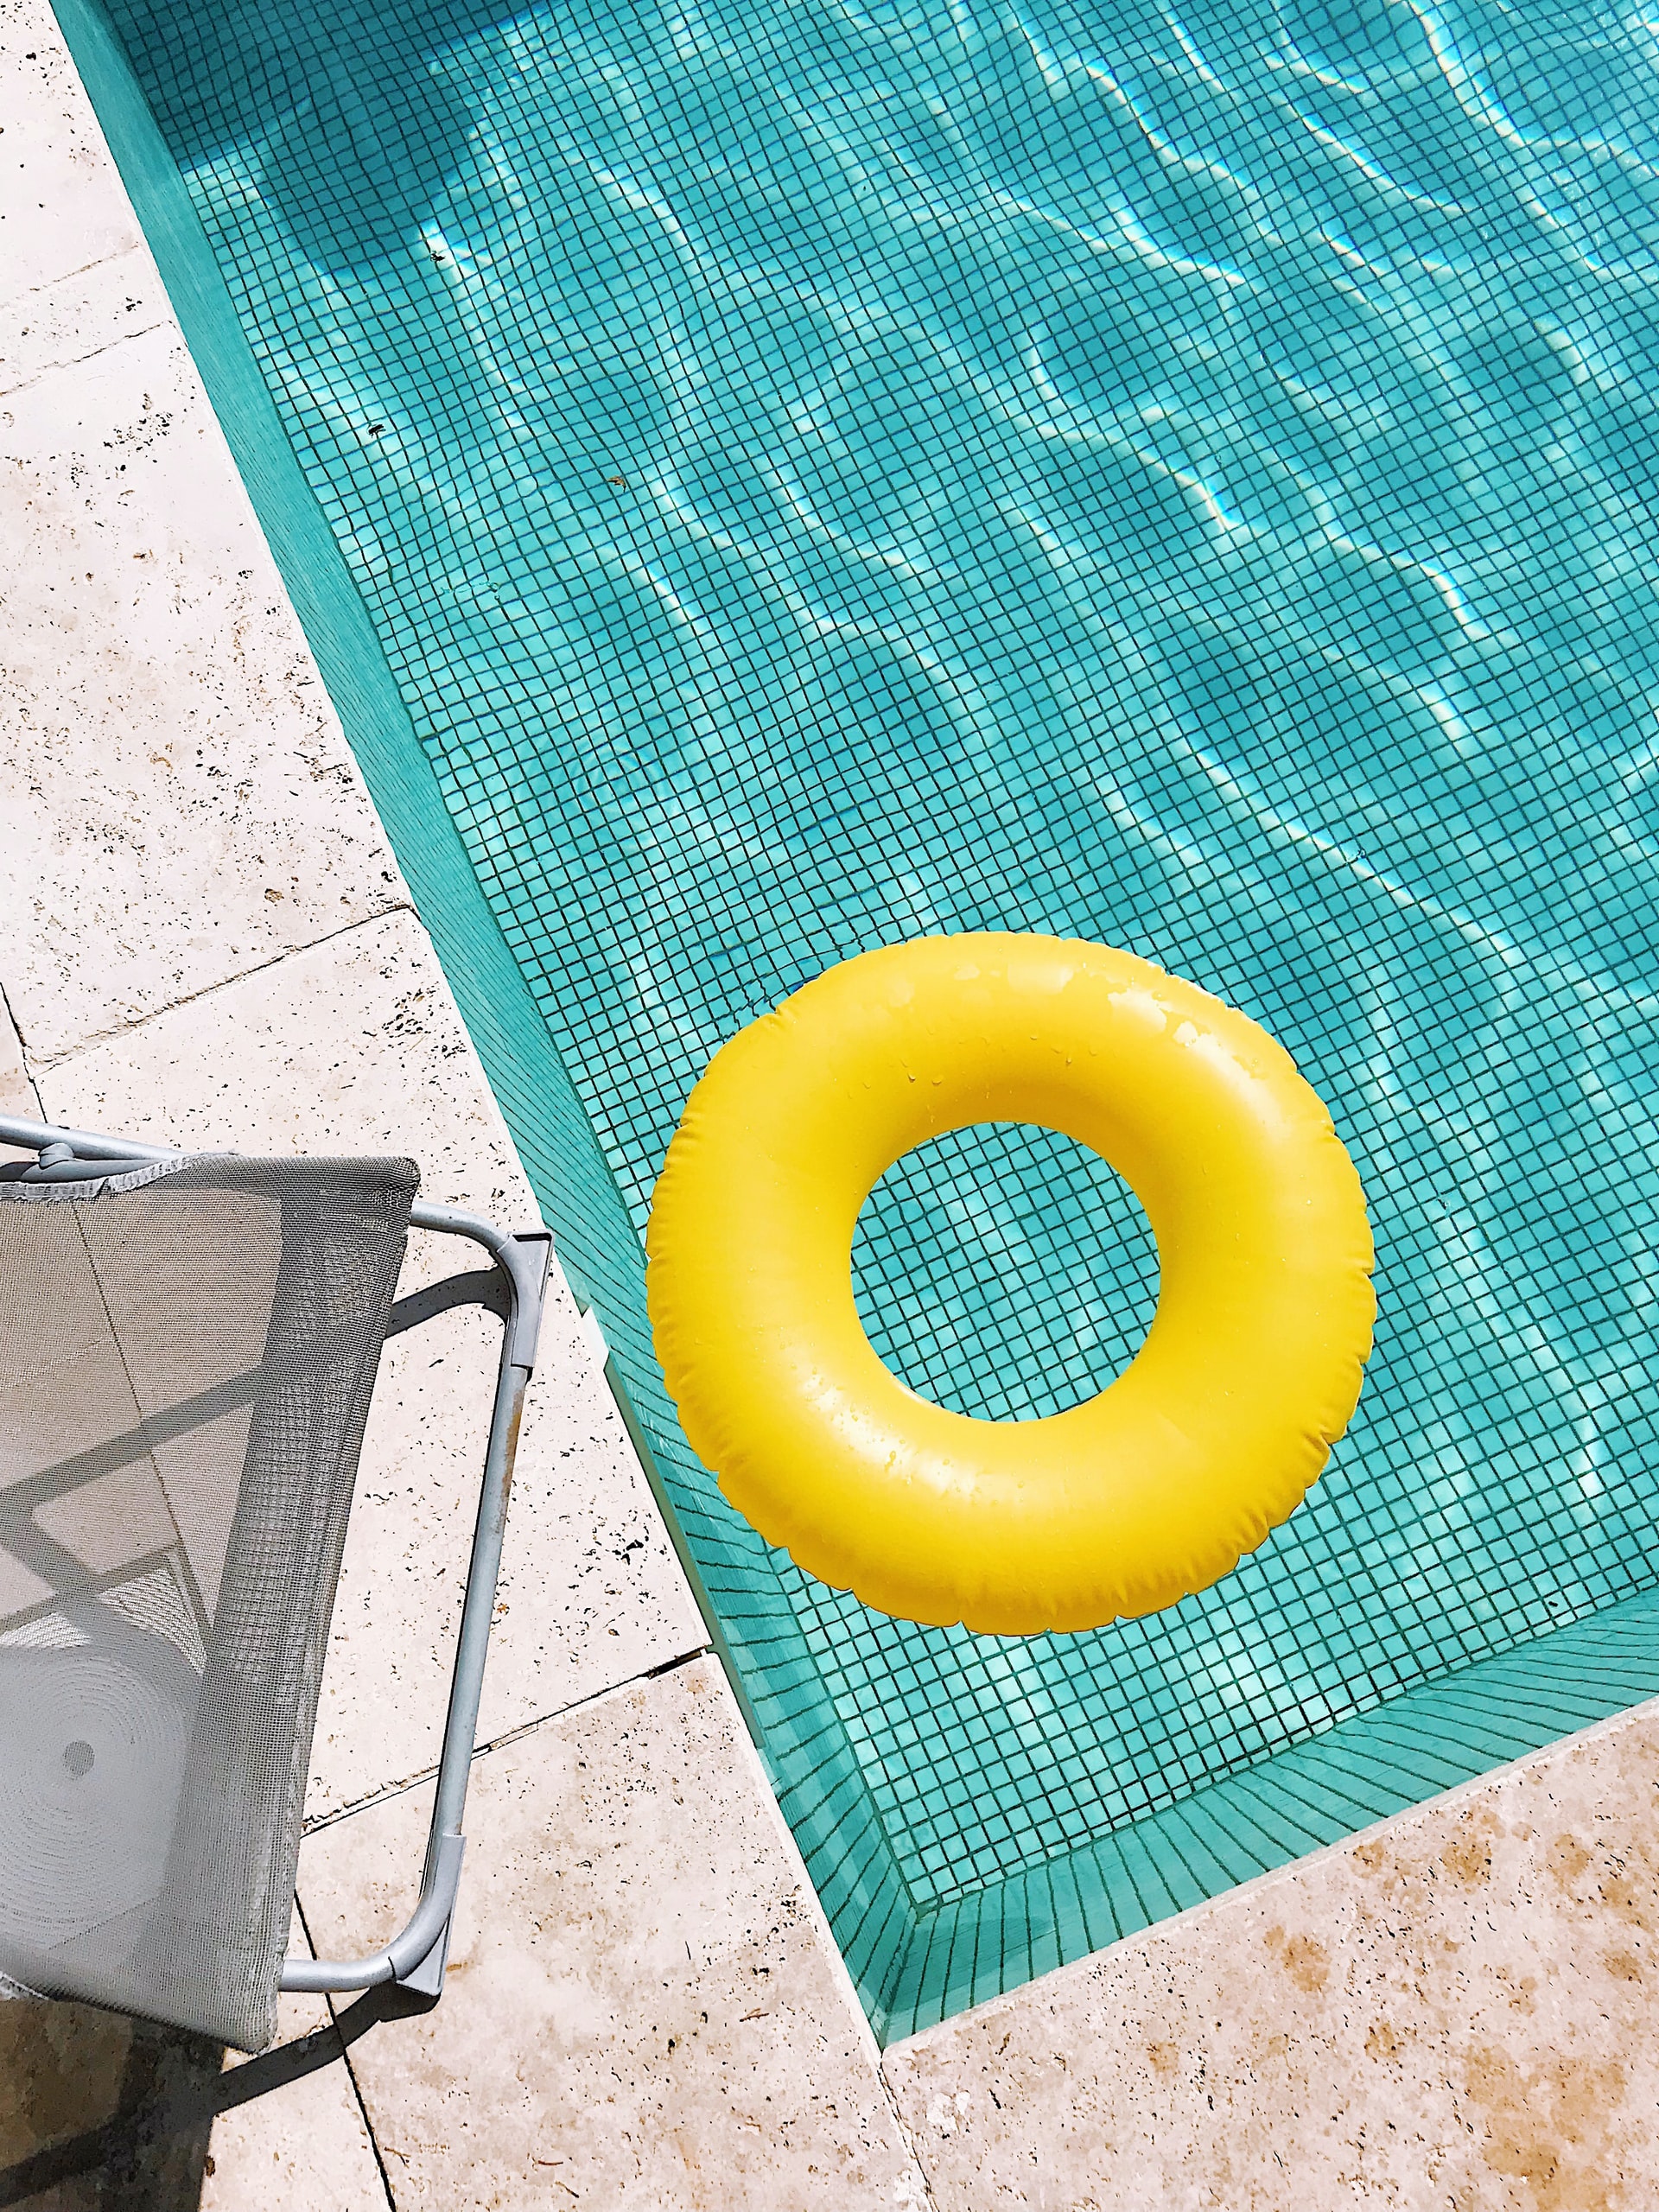 Pool Maintenance Tips Article Image